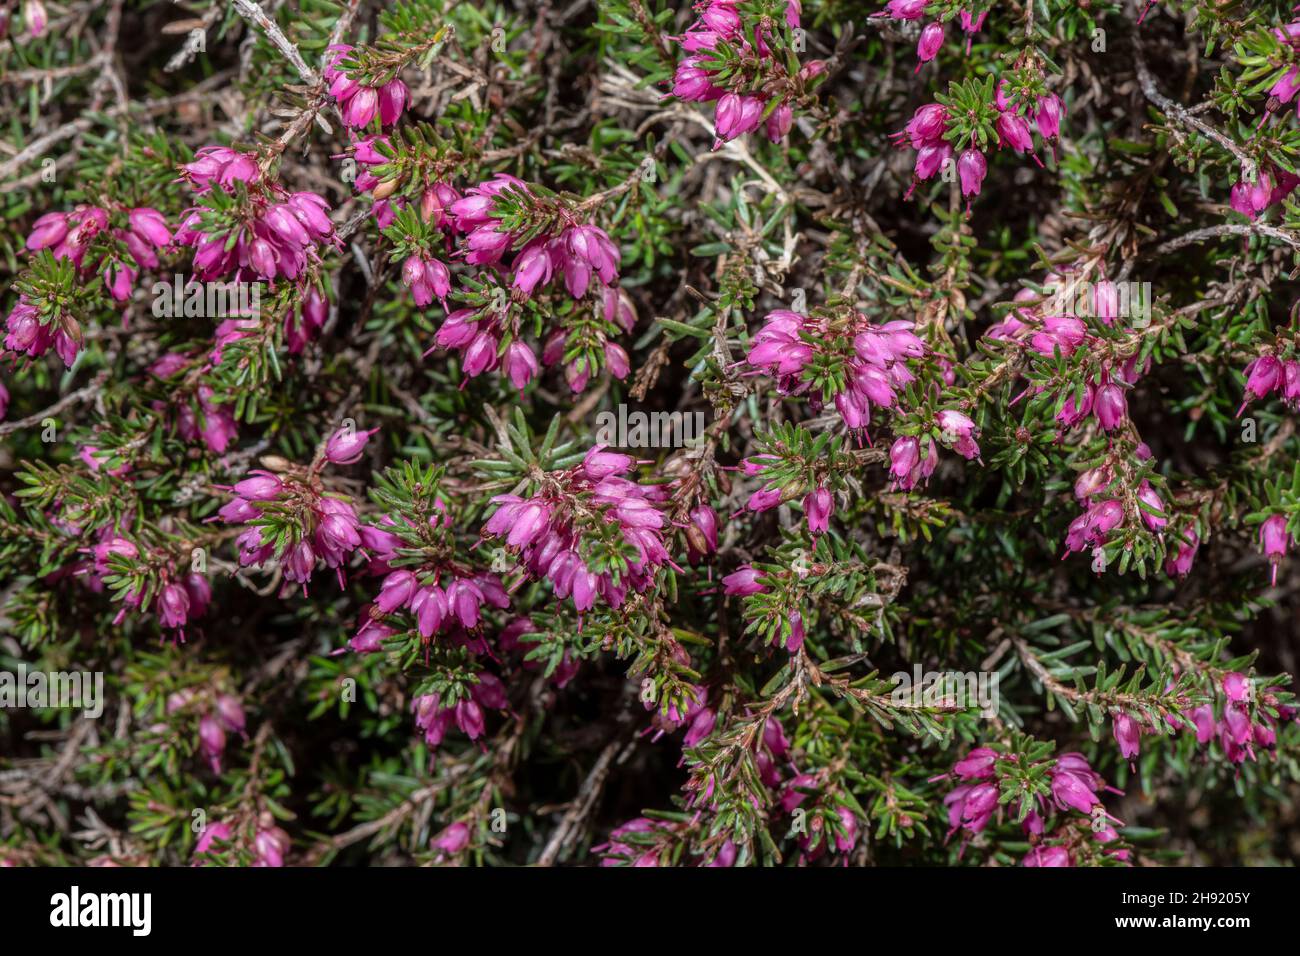 Winter heath, or alpine heath, Erica carnea, in flower in the Italian Alps. Stock Photo